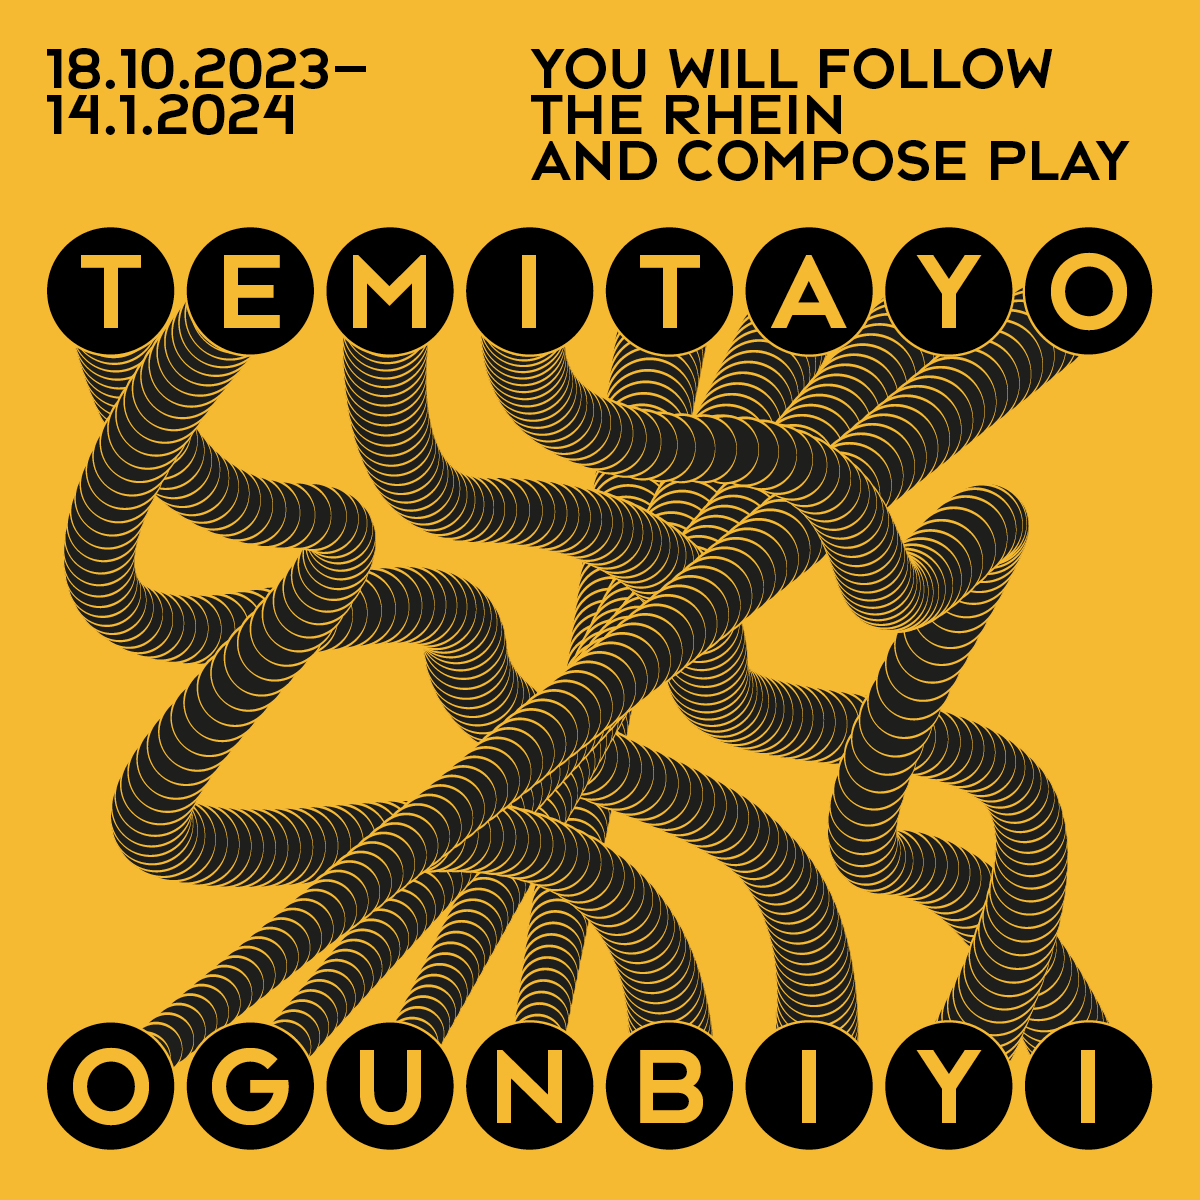 Temitayo Ogunbiyi. You will follow the Rhein and compose play